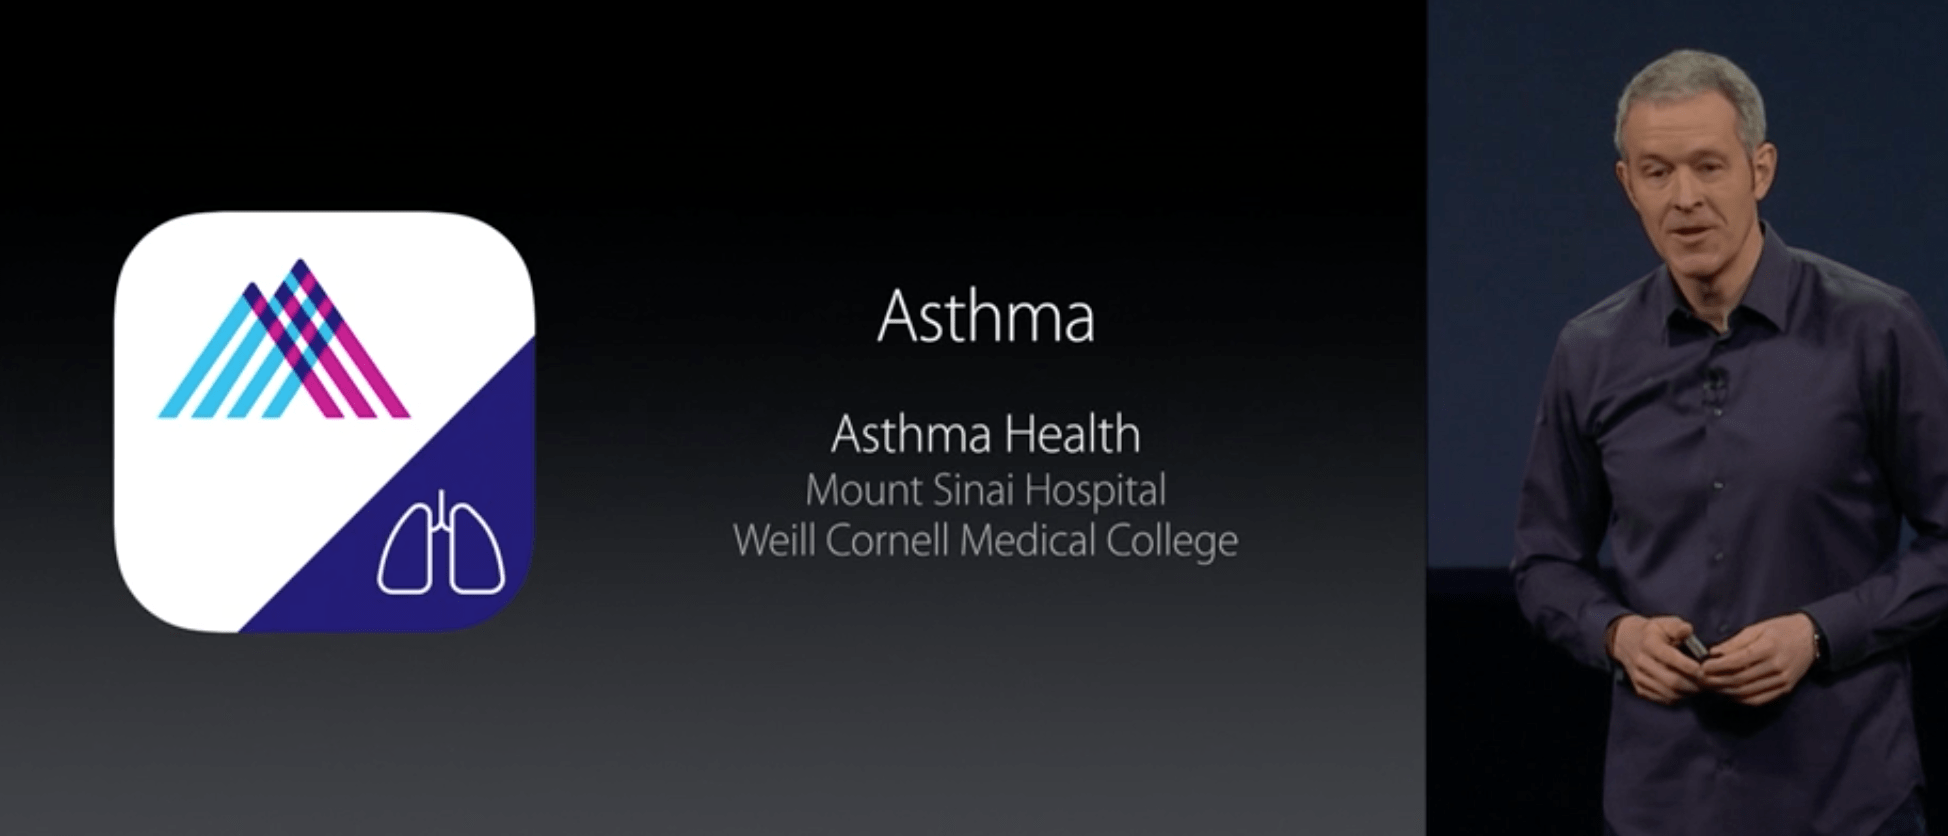 Asthma Asma e ResearchKit na keynote da Apple